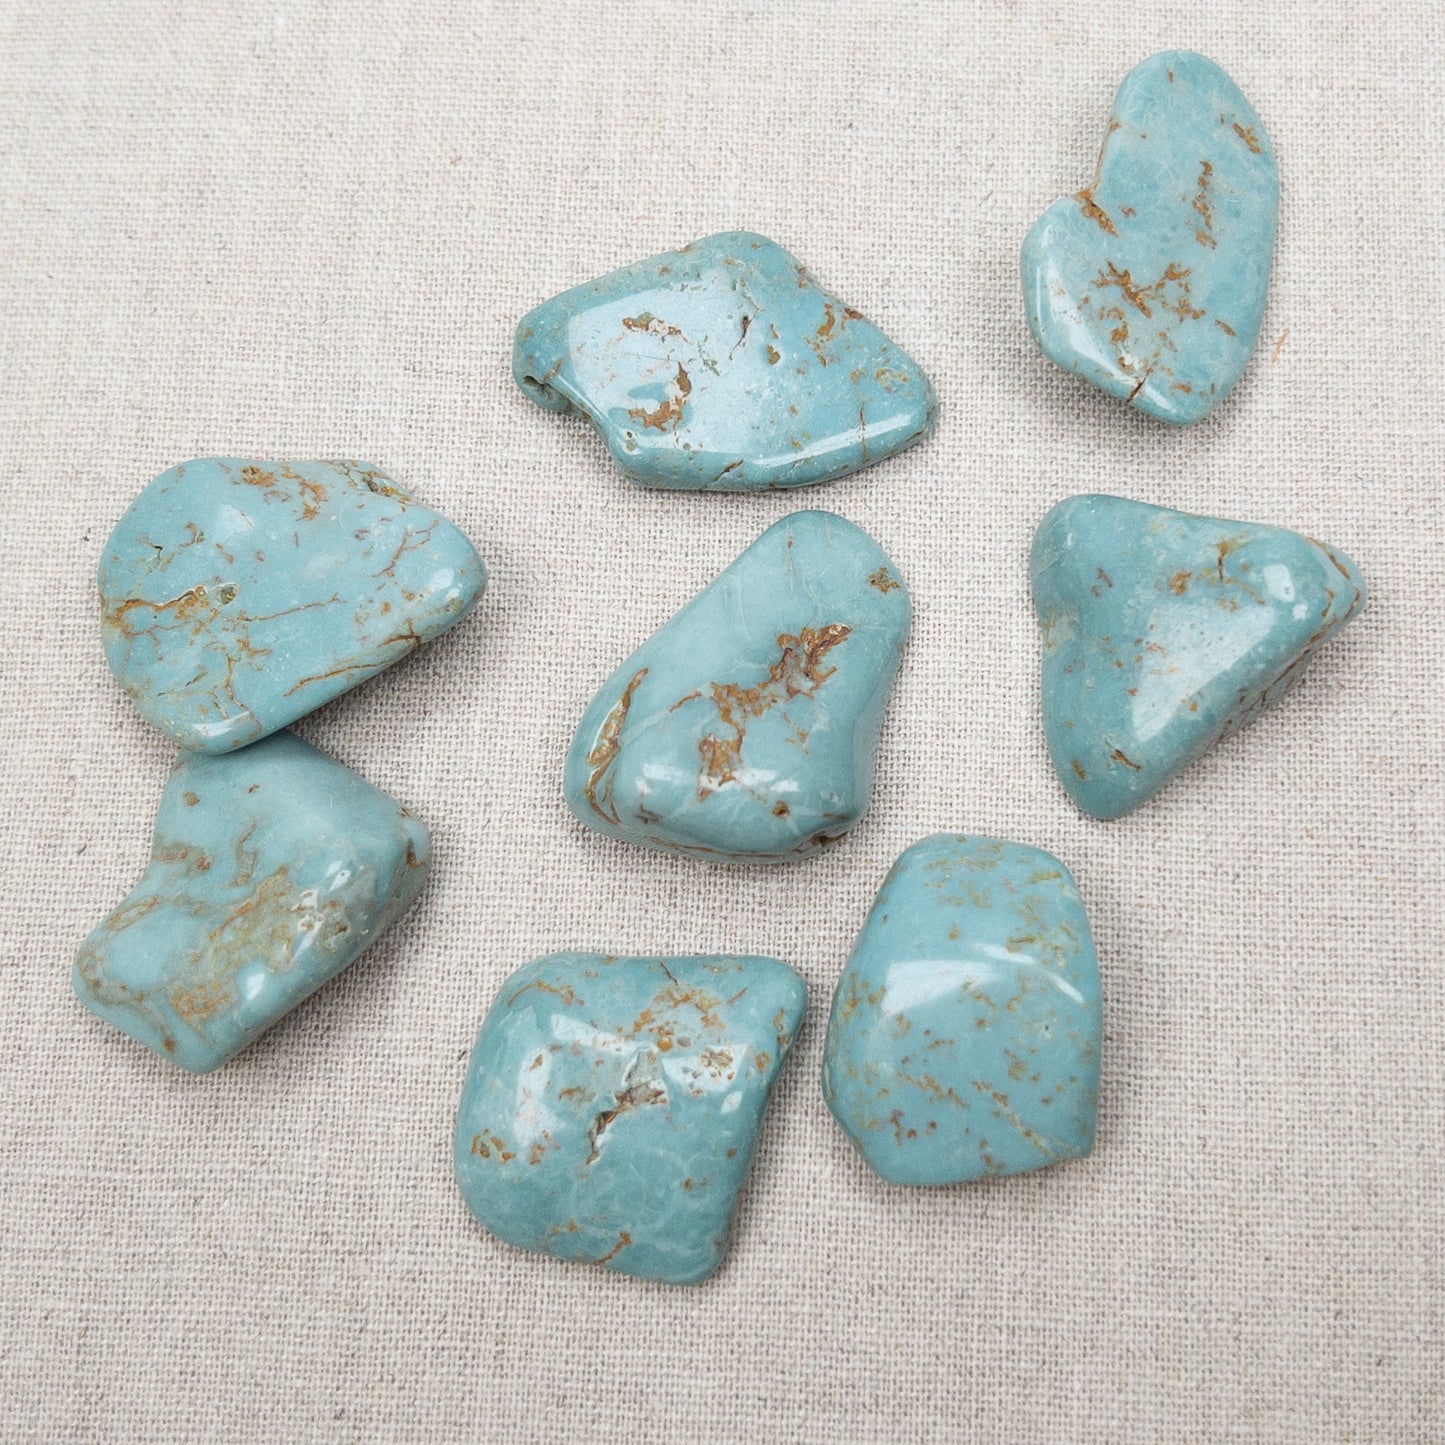 Brazilian Turquoise Tumbled Stone - 1 pc.